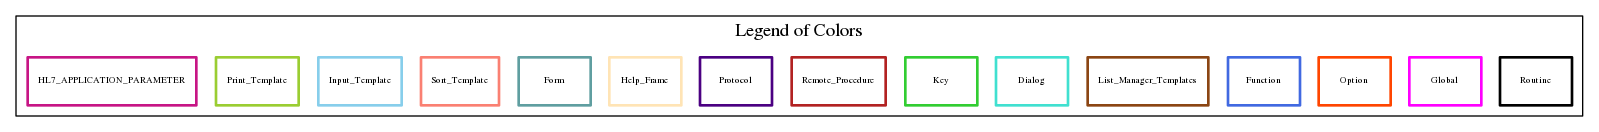 Legend of Colors